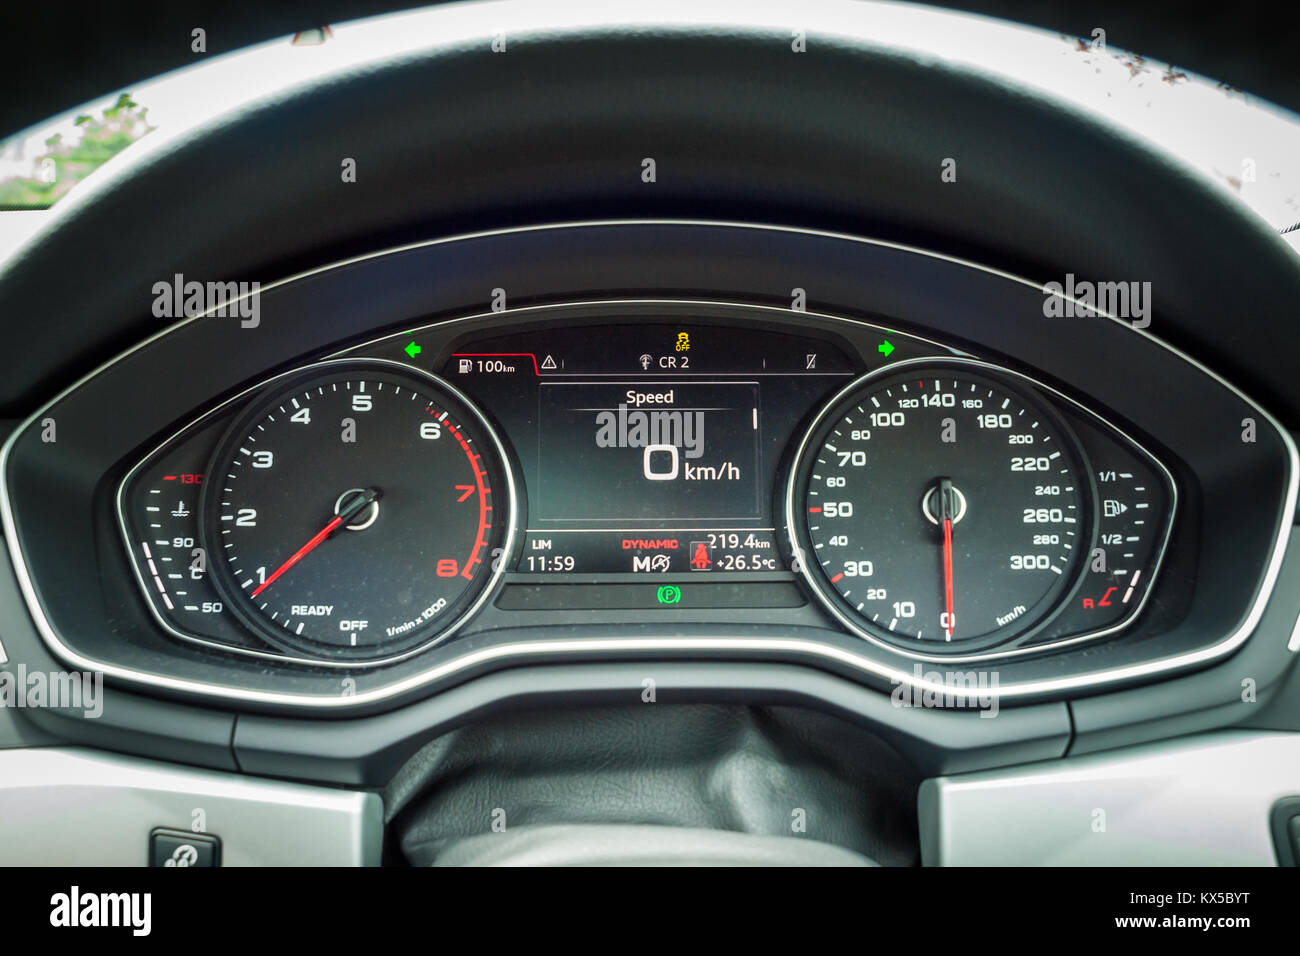 Prueba Audi A5 Sportback 2017: ¡deja de mirarte al espejo!